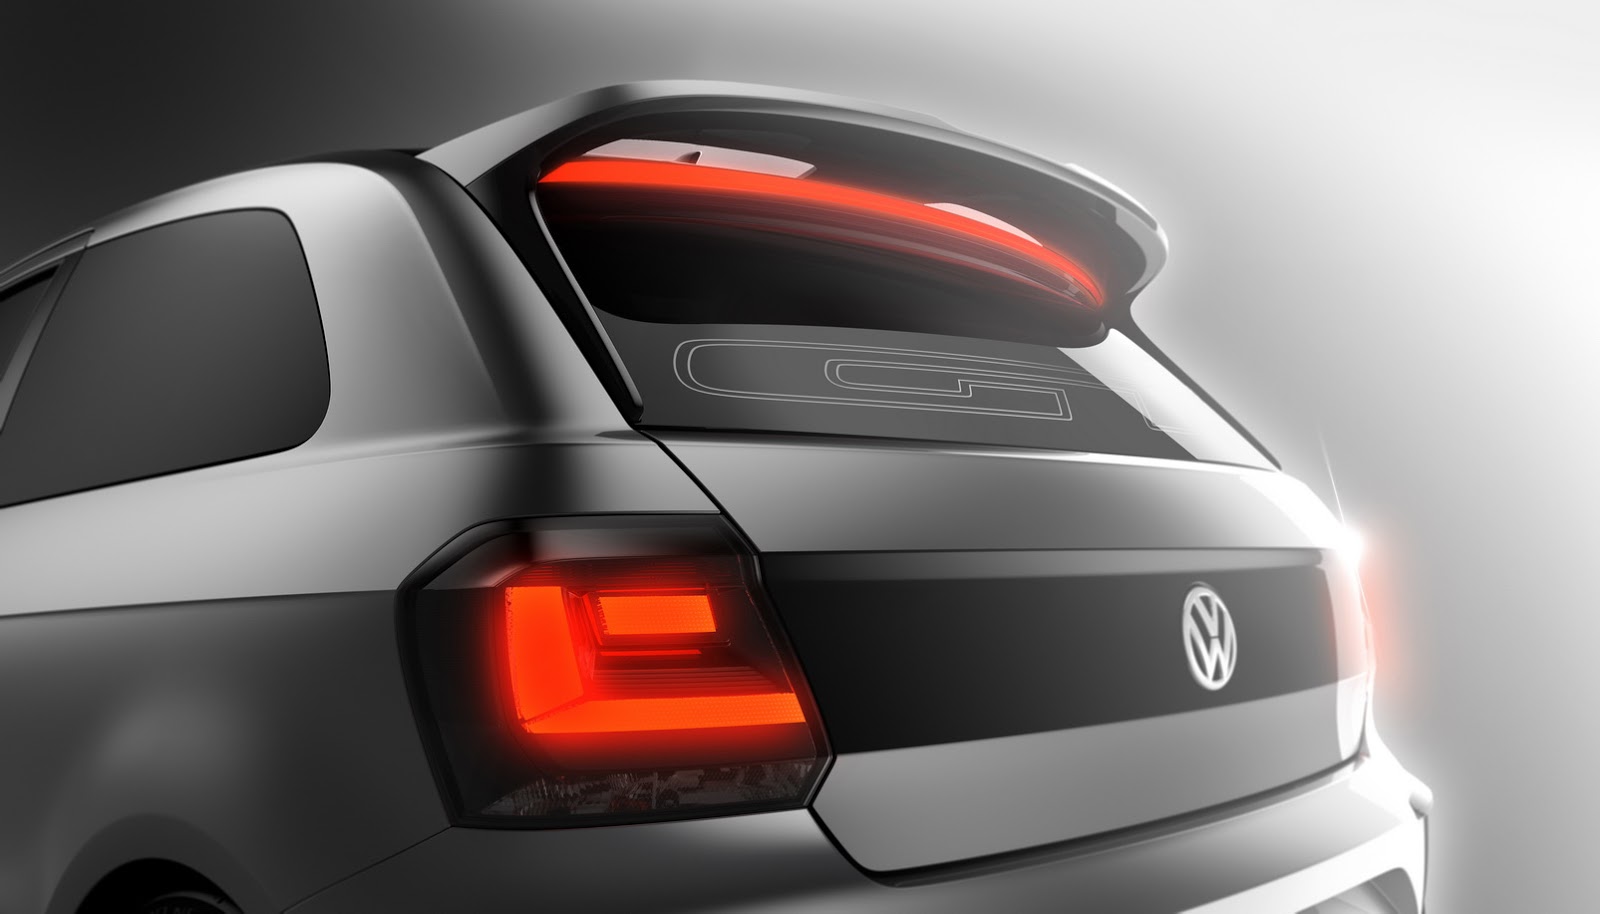 Volkswagen unveils Gol GT concept at Sao Paulo Motor Show in Brazil